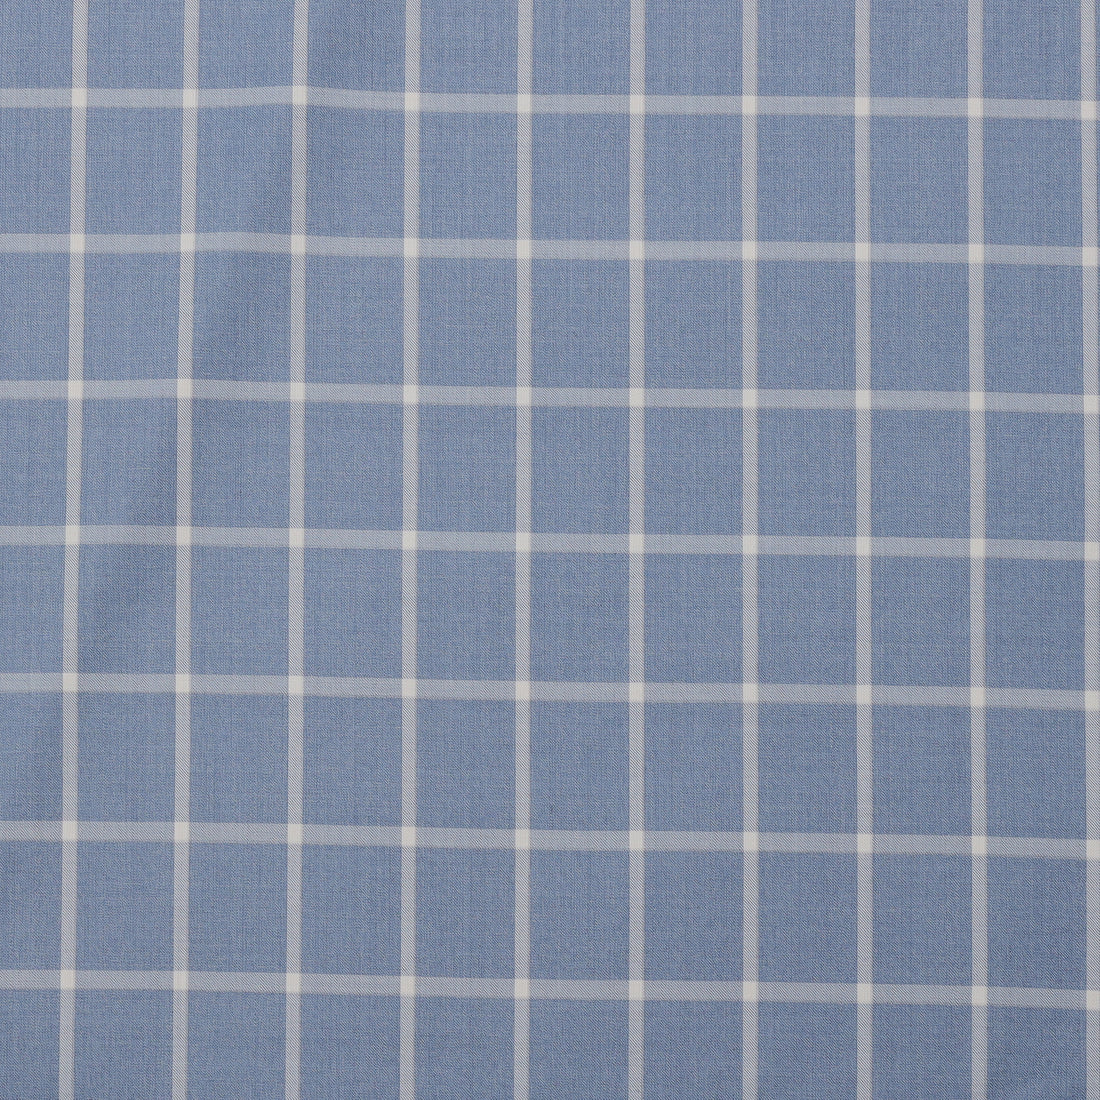 Wool Blend - Suiting - Windowpane Plaid - Light Blue